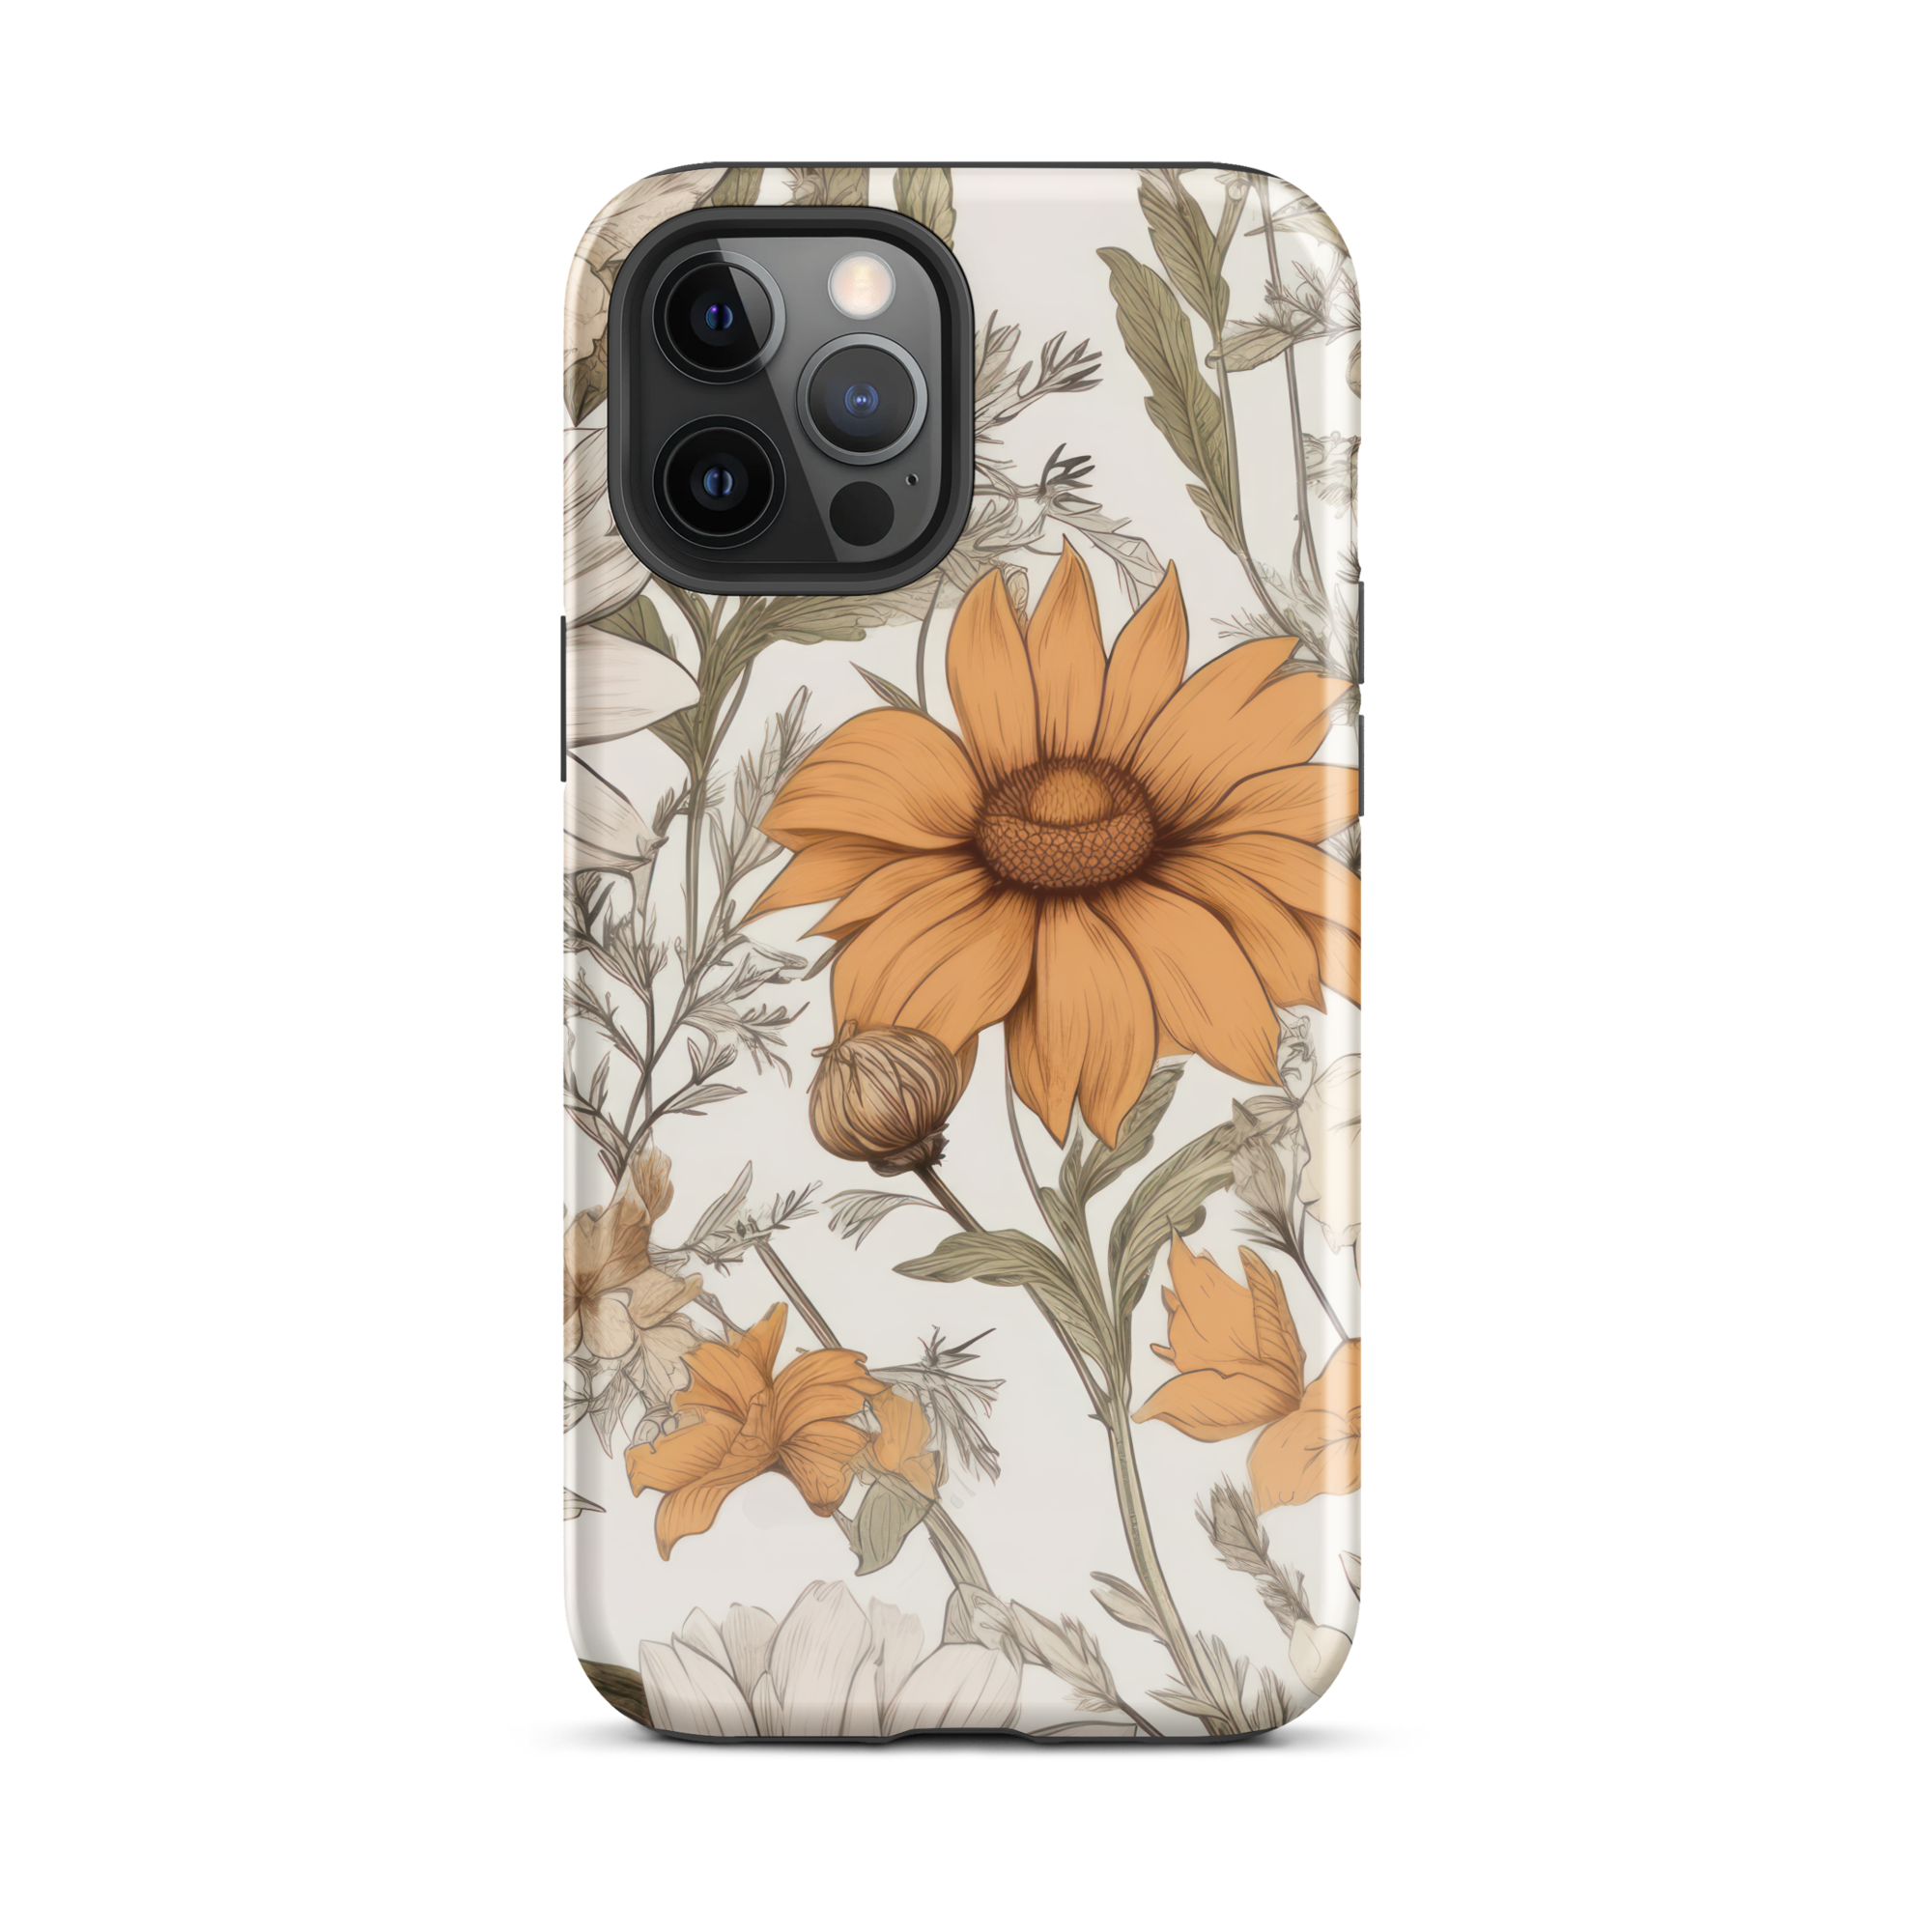 Vintage Sunflower iPhone 12 Pro Max Case